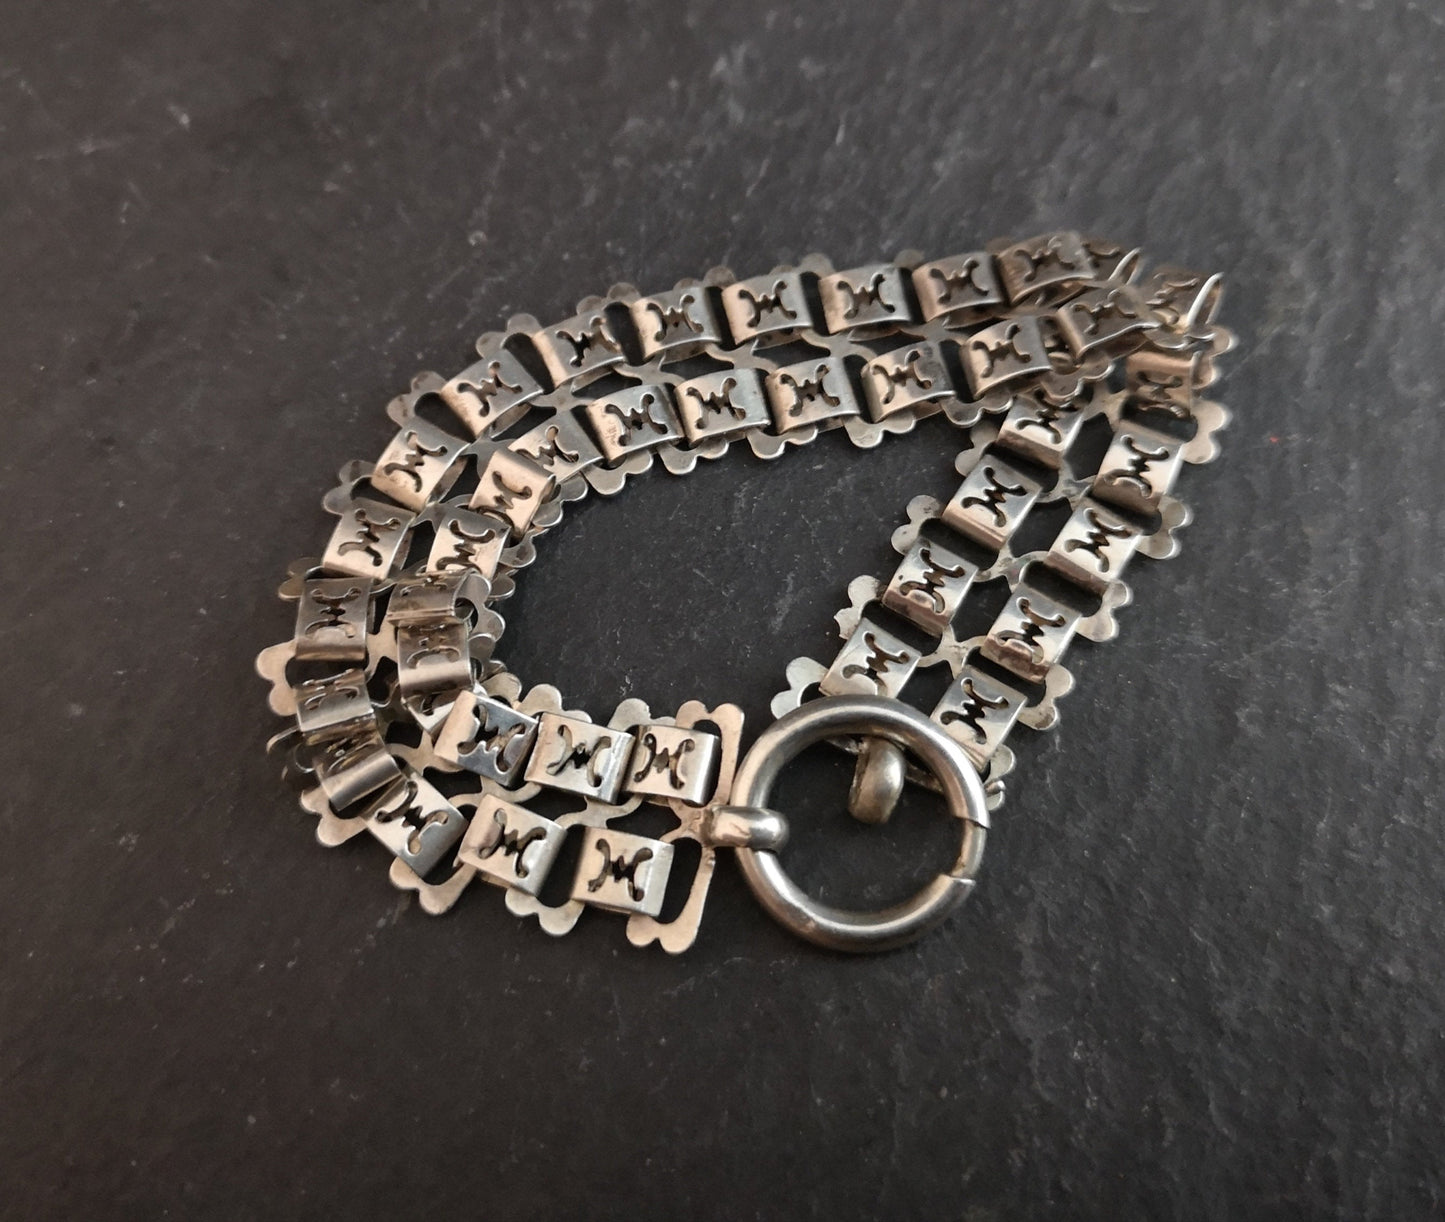 Antique Victorian silver book chain bracelet